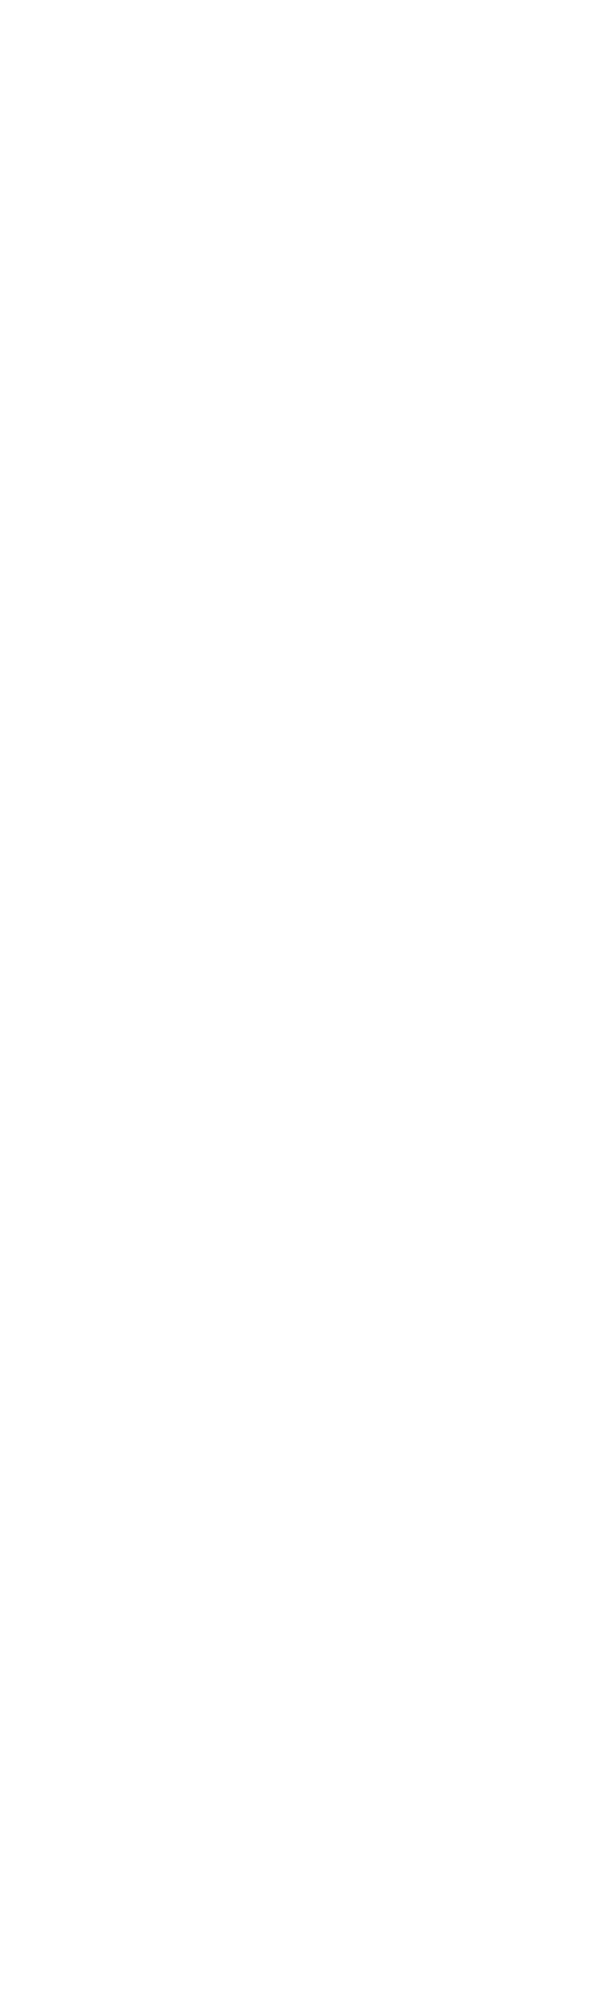 cube logo iOS icon